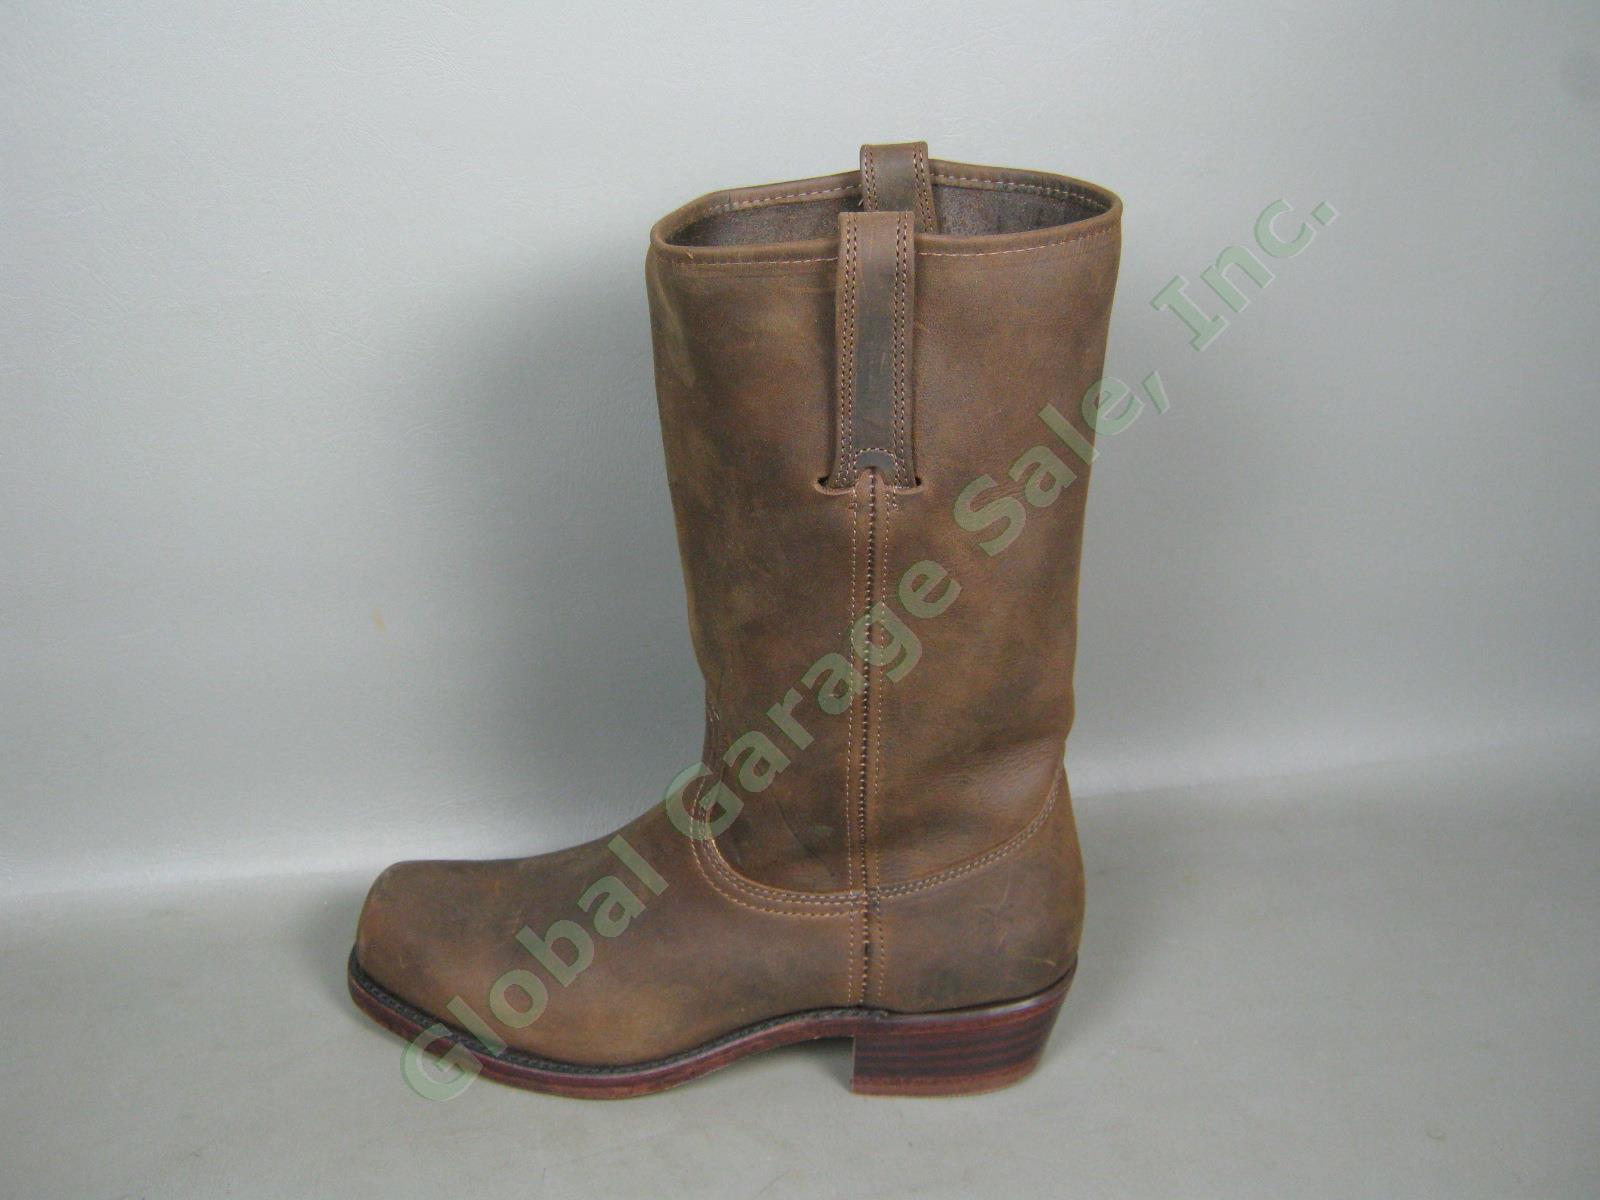 Mens Frye Cavalry 12L Tan Leather Boots Worn Once 9.5 Medium Width W/Box 87410-1 1